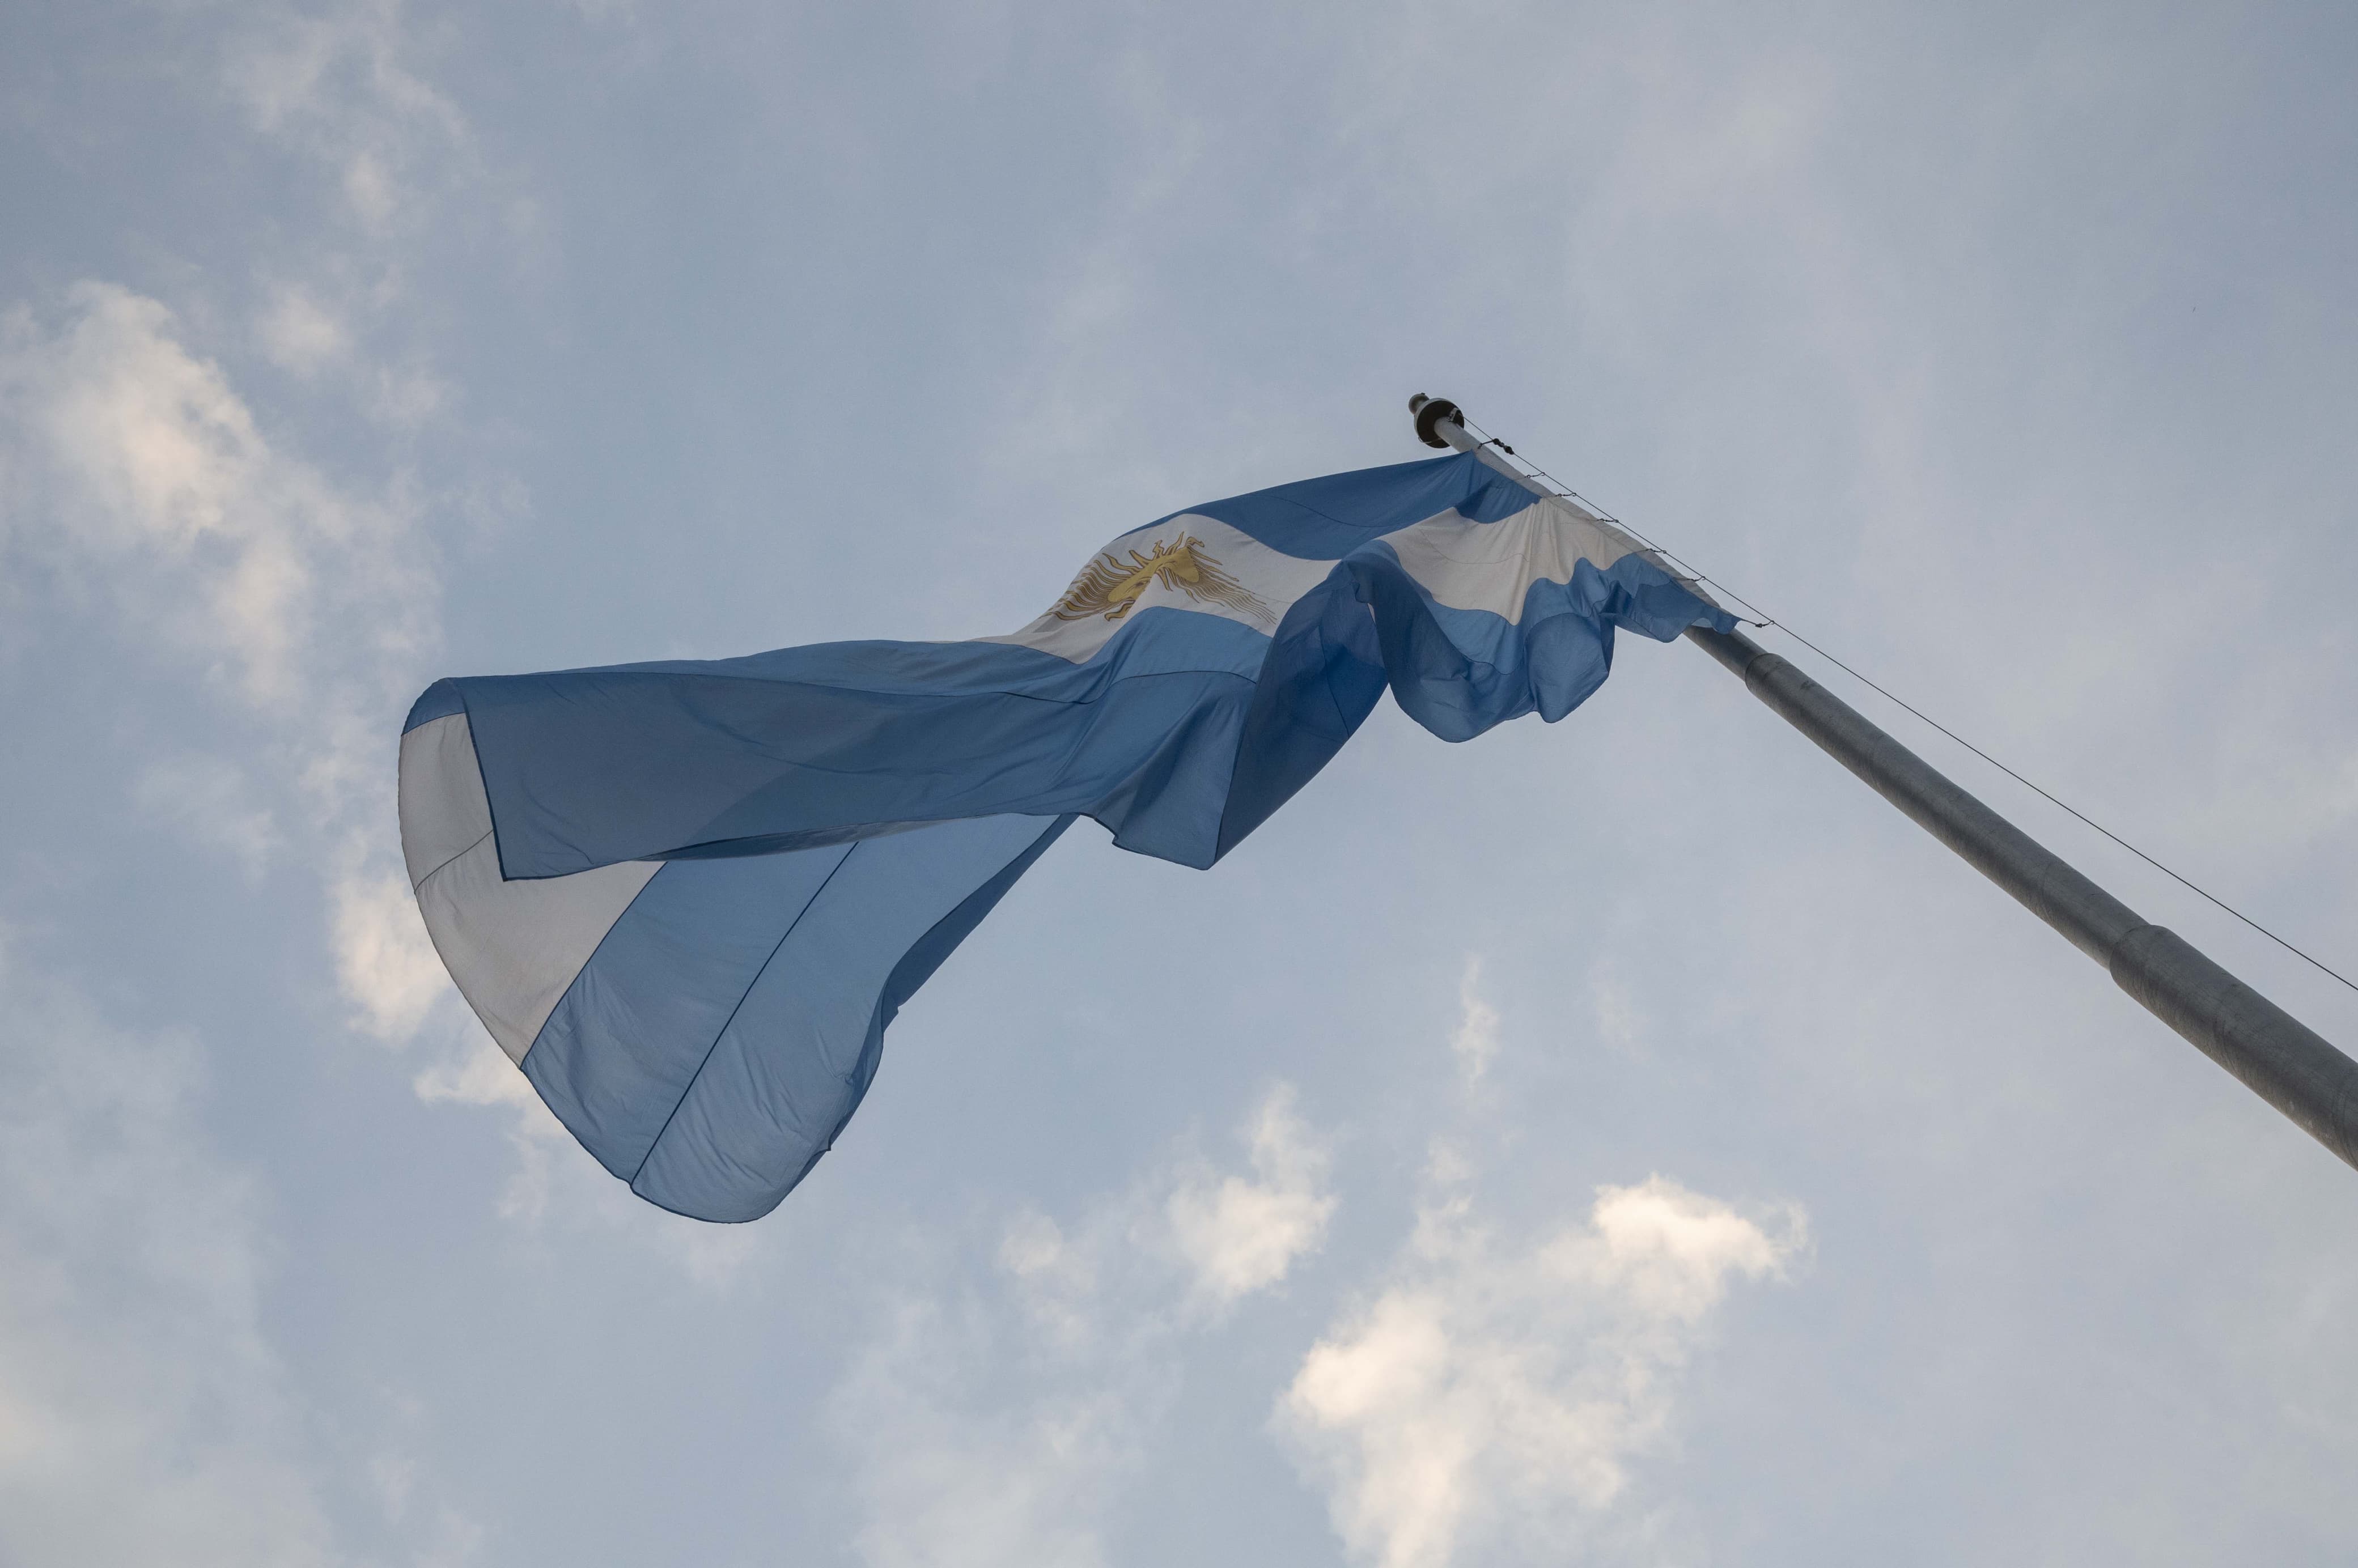 bandera argentina